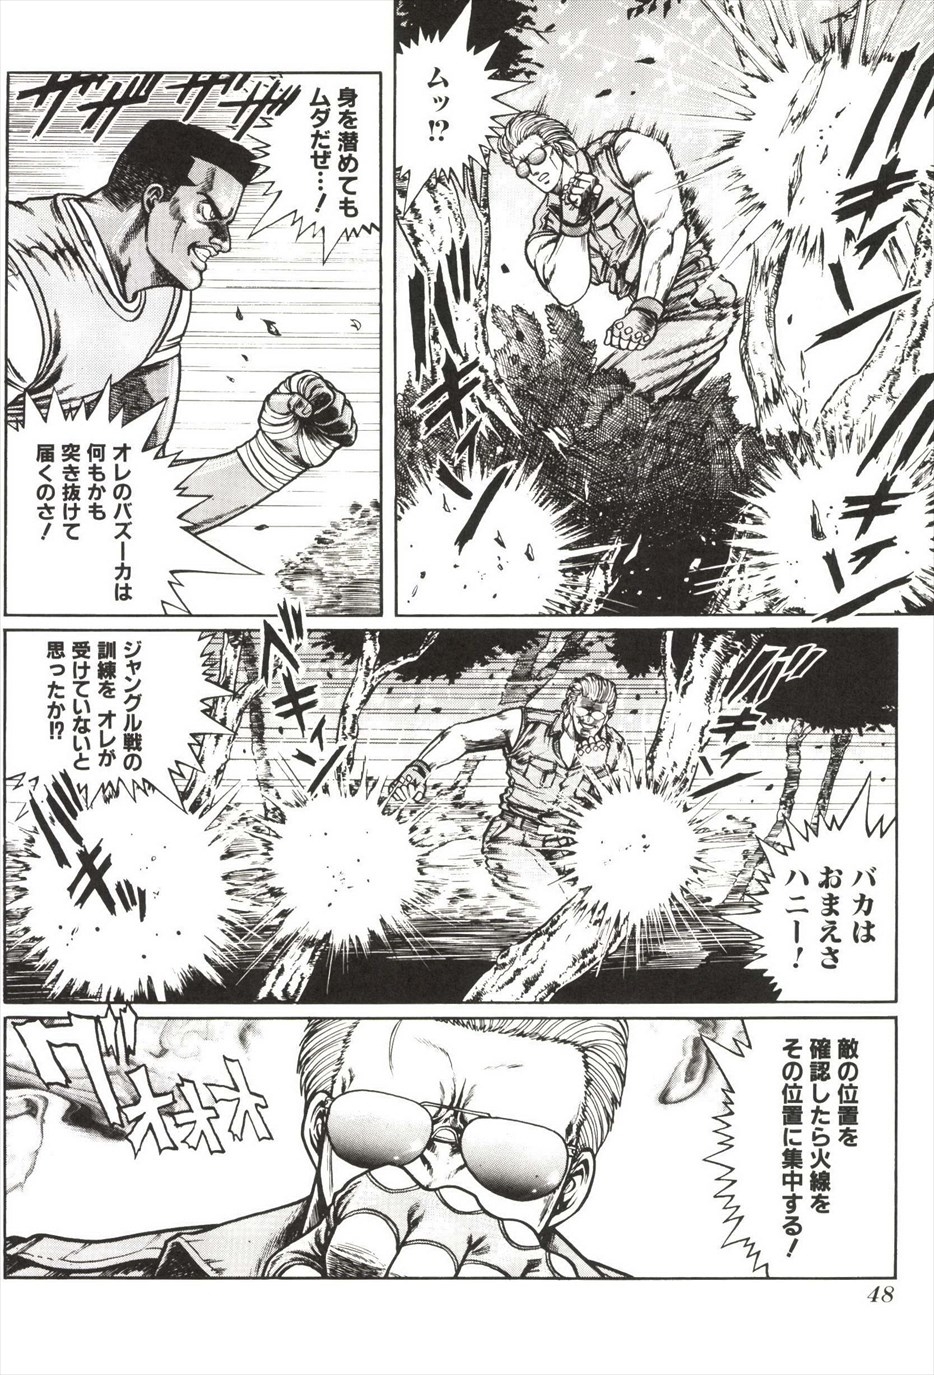 [amazishi etsuya] ART OF FIGHTING ryuuko no ken 2-2 49